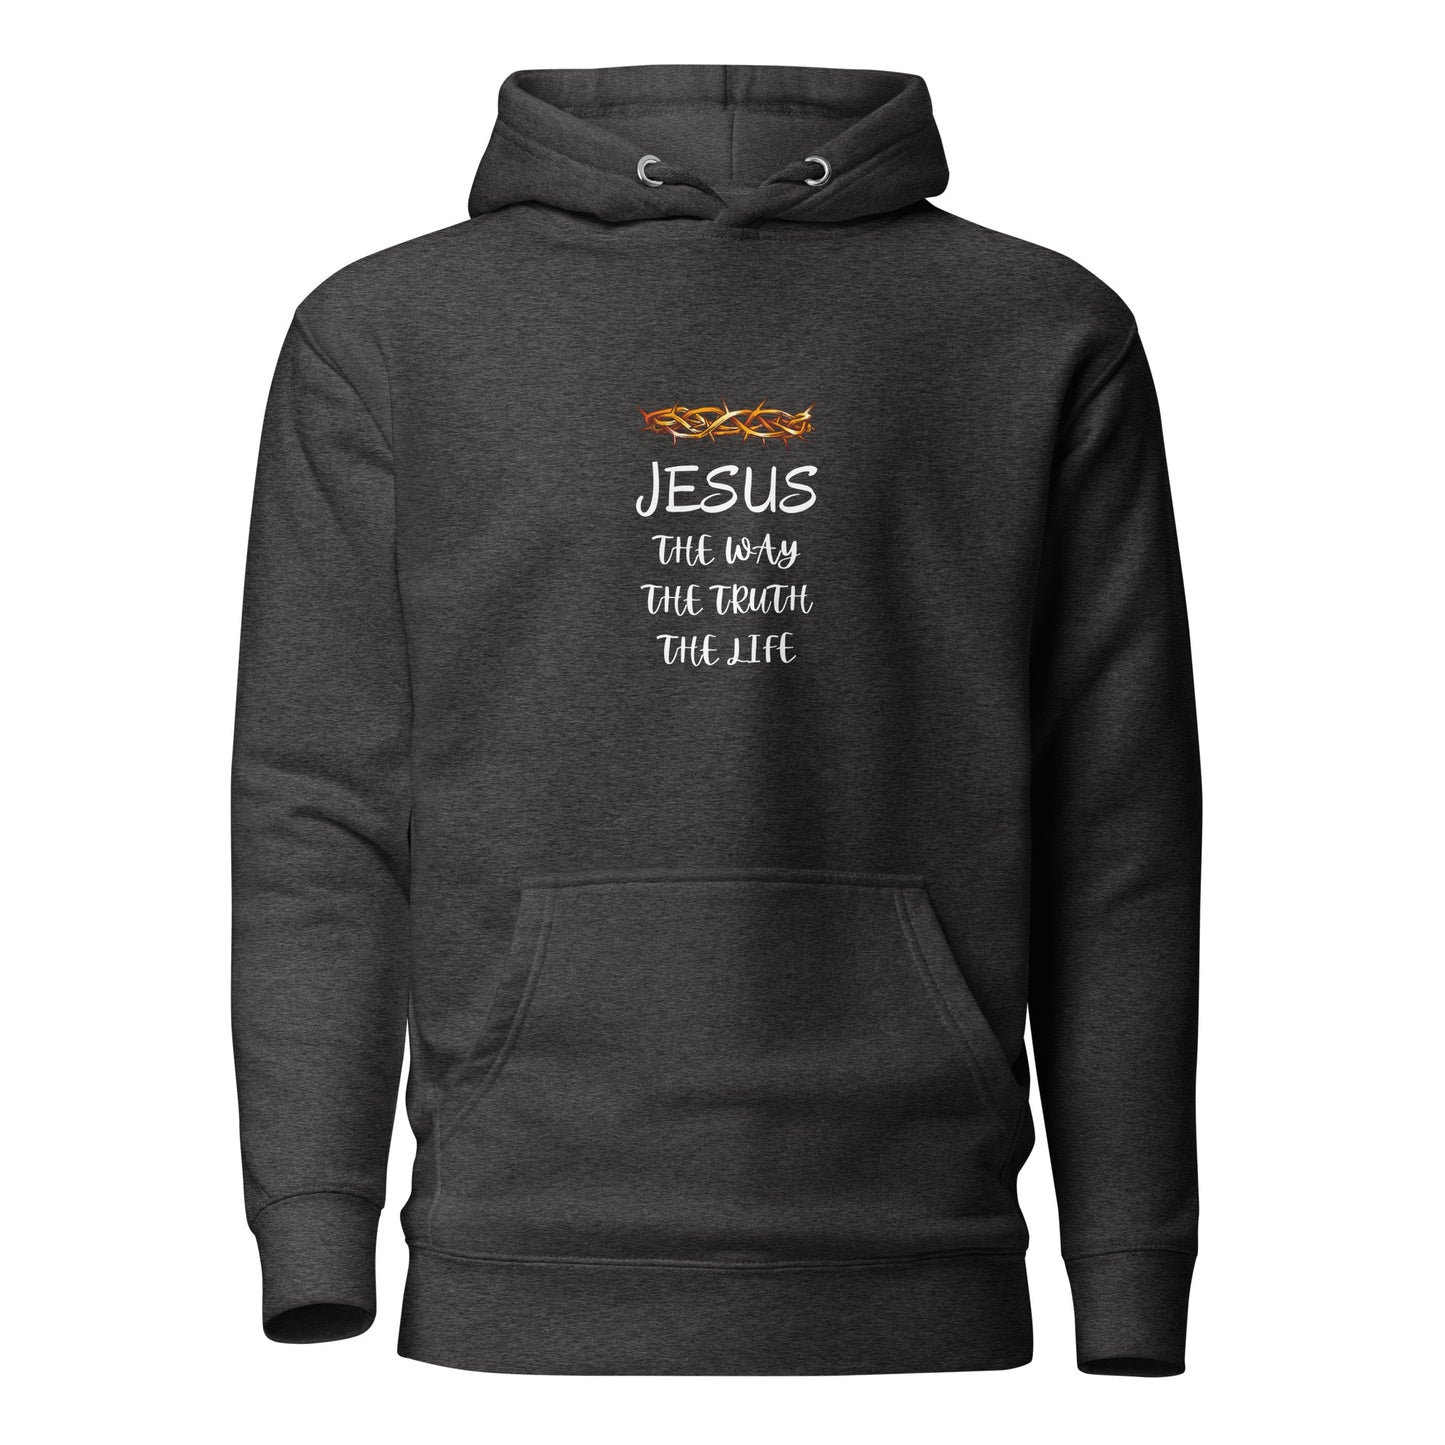 Jesus The Way Hooded Sweatshirt